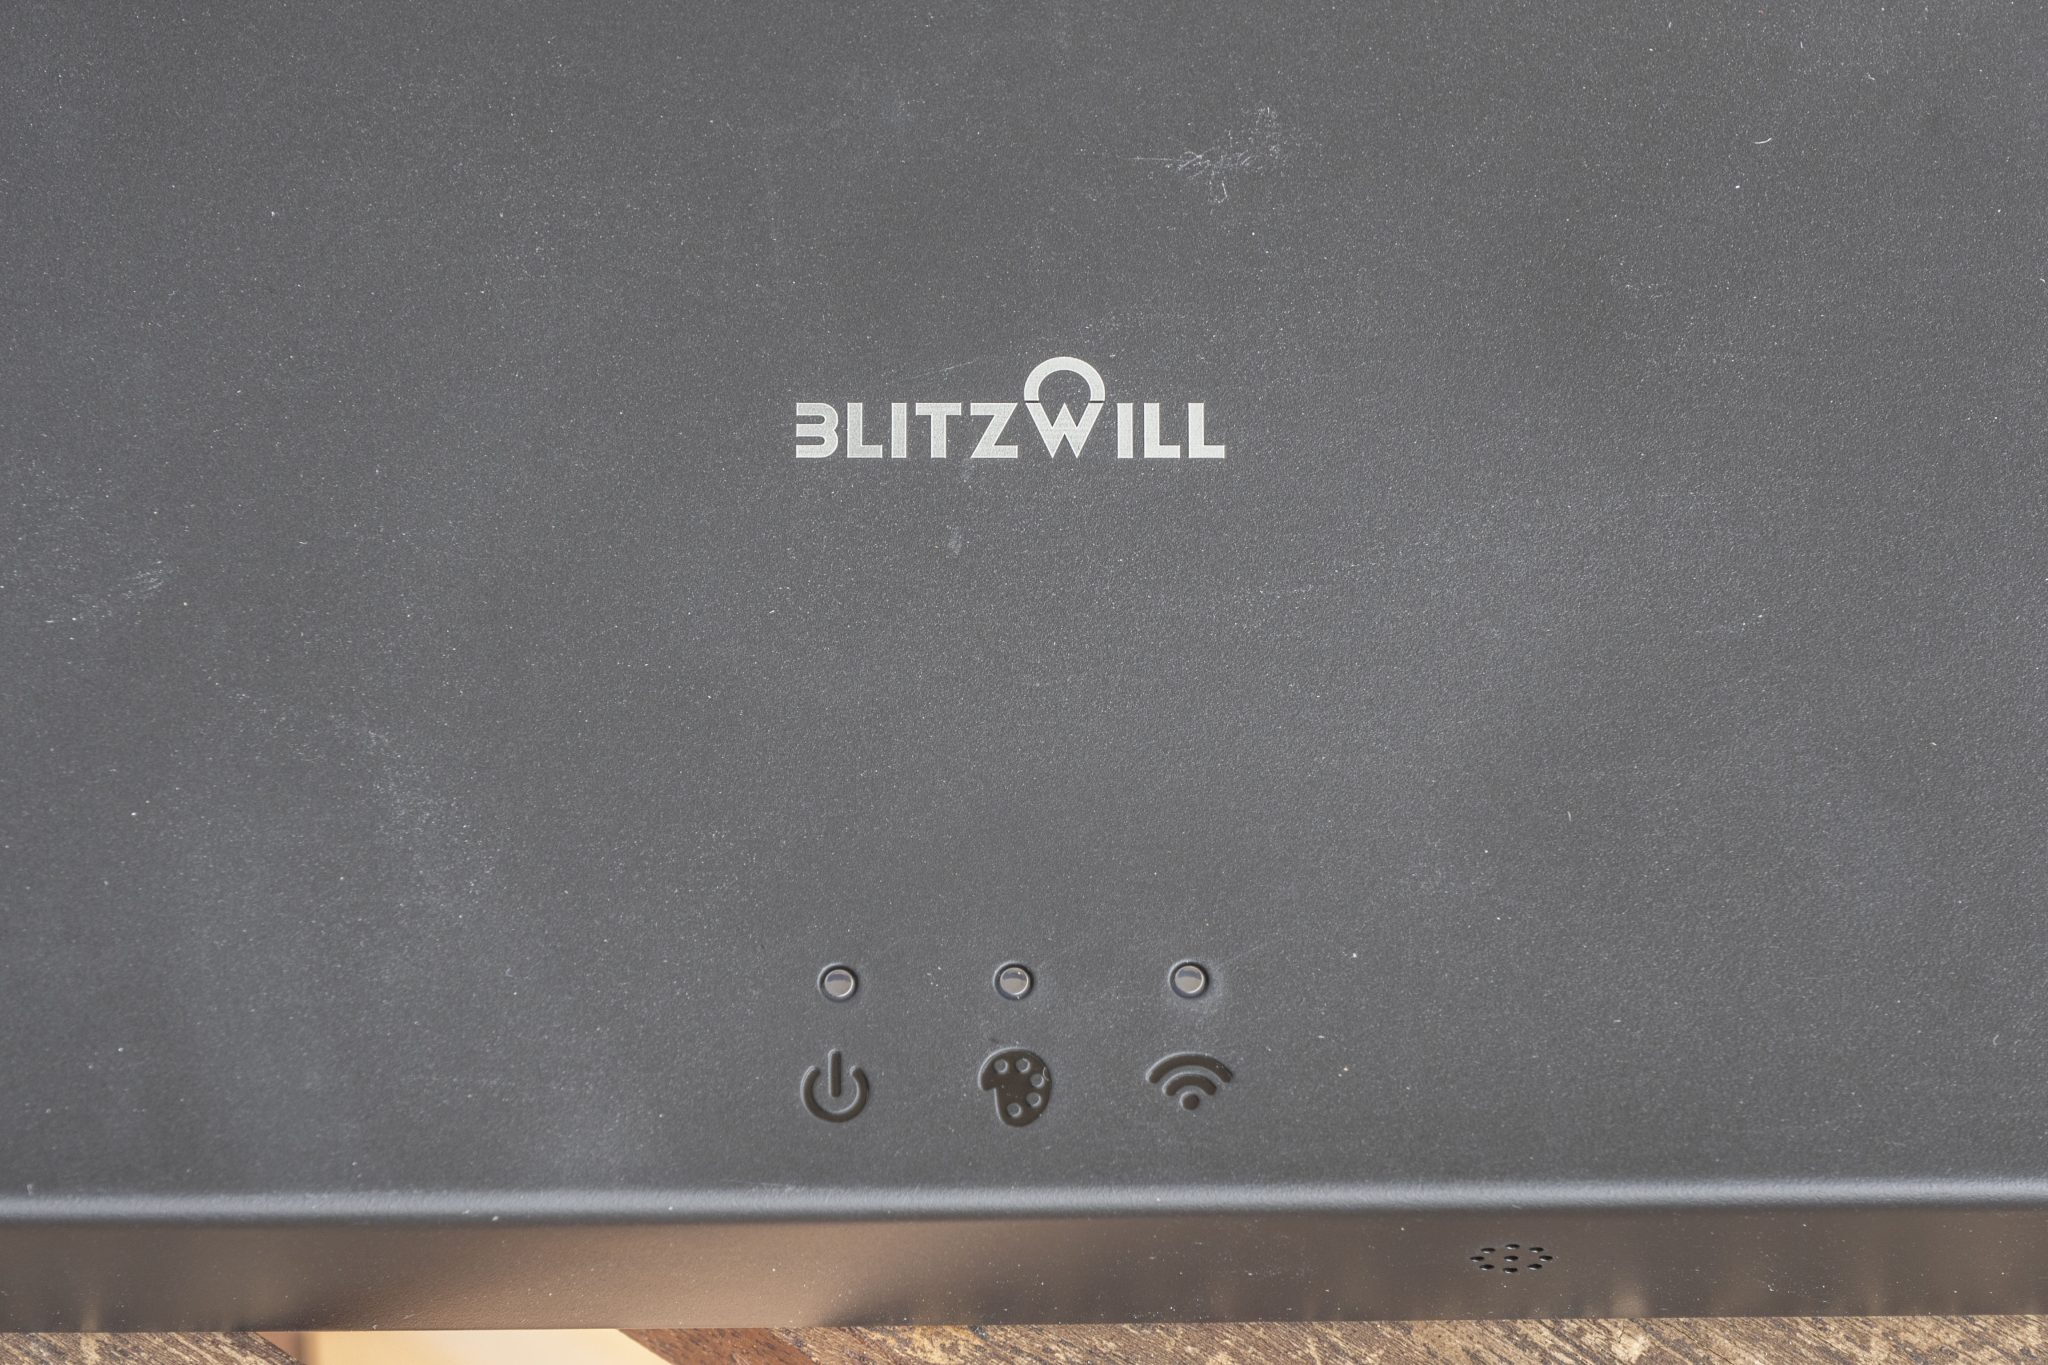 BLITZ WILL BW-LB2 WiFi TV LED Backlight User Manual